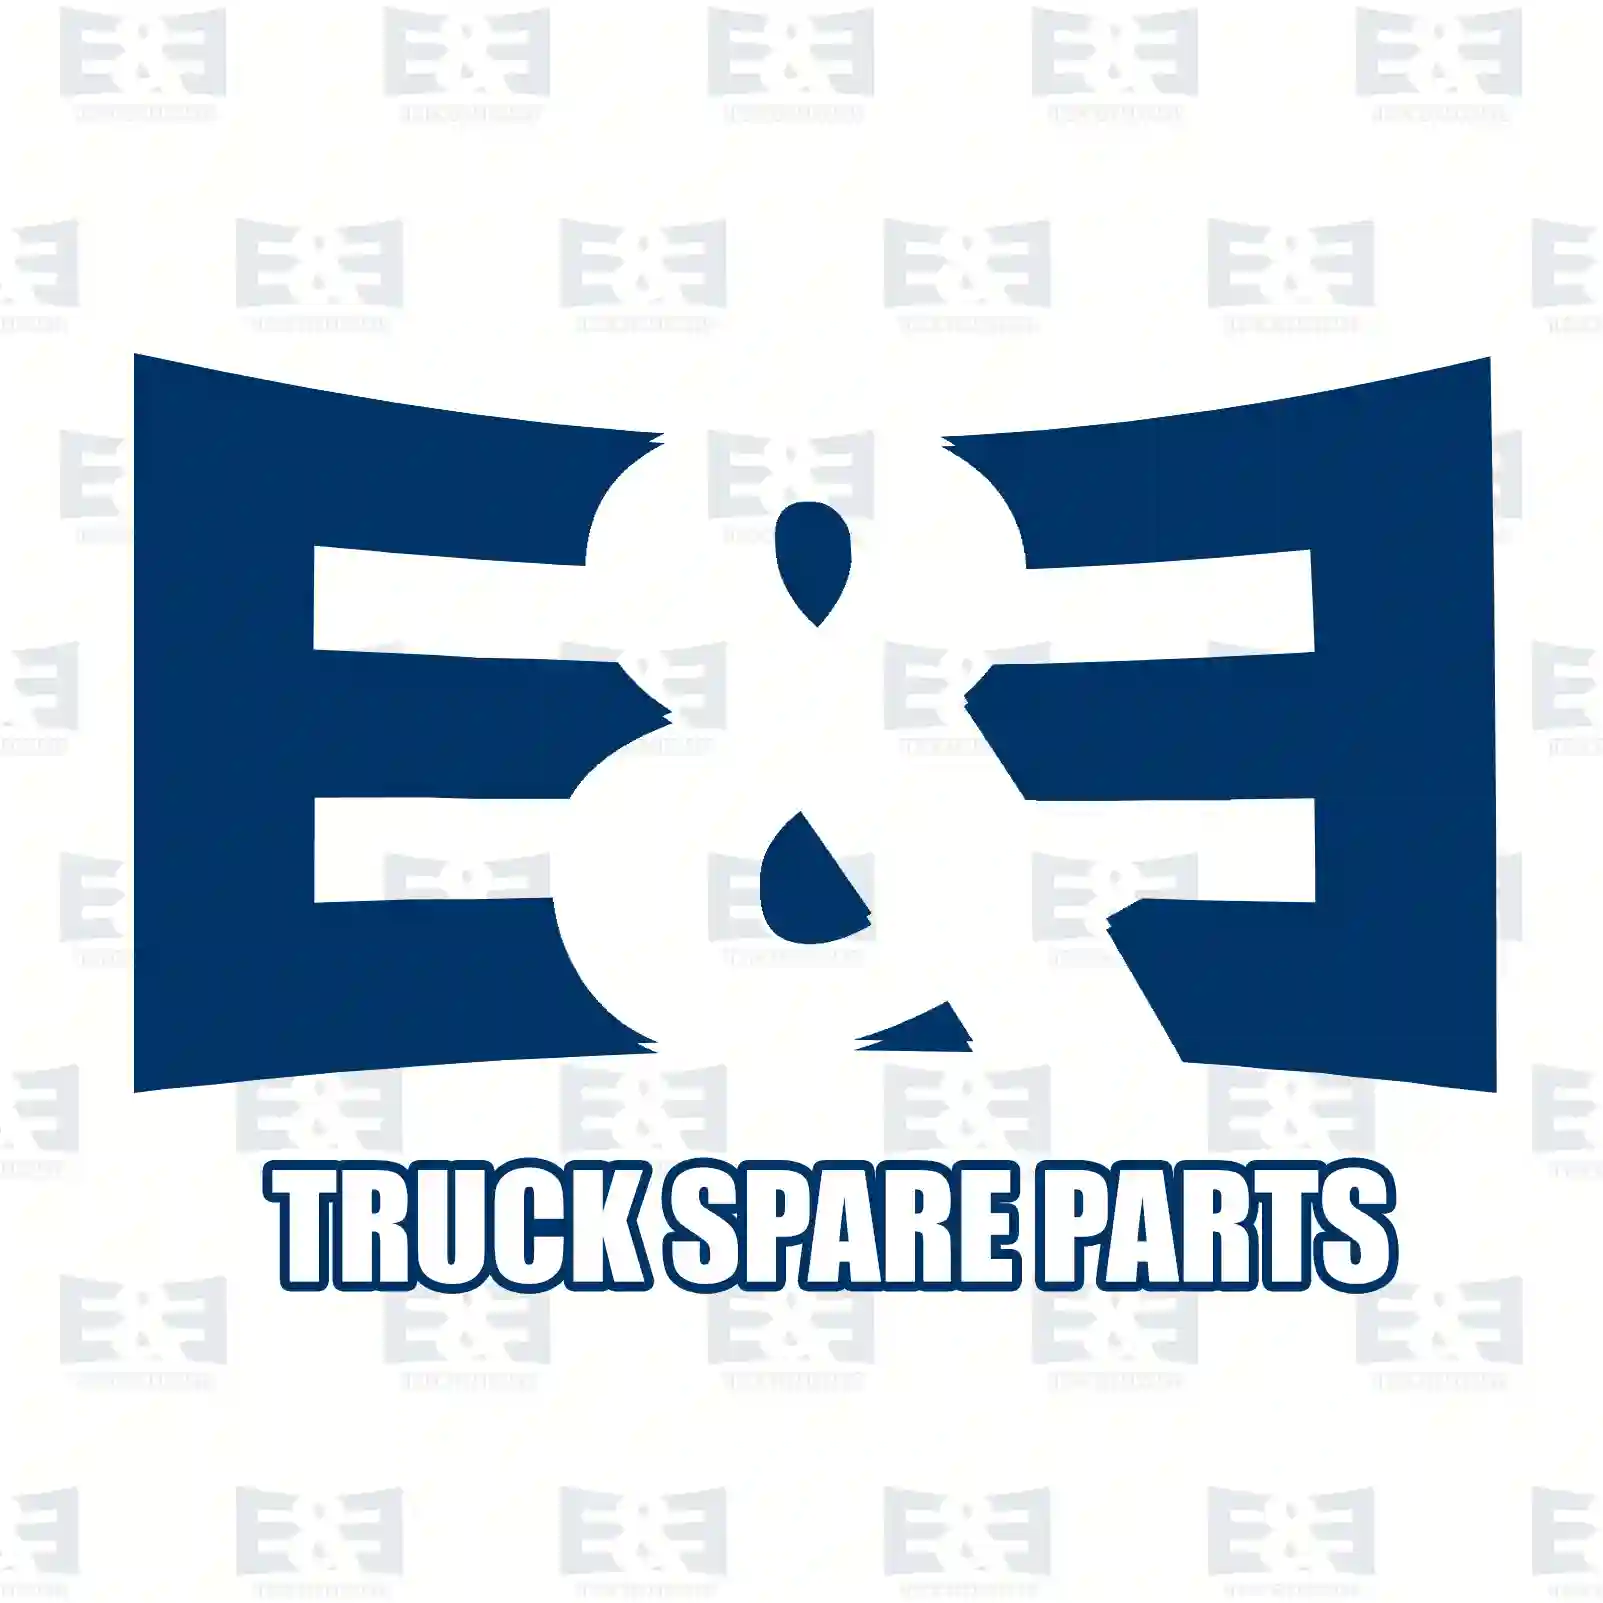 Ball joint, right hand thread, 2E2277792, 81953016200, 81953016202, 81953016203, 81953016227, 3124625, ZG40142-0008 ||  2E2277792 E&E Truck Spare Parts | Truck Spare Parts, Auotomotive Spare Parts Ball joint, right hand thread, 2E2277792, 81953016200, 81953016202, 81953016203, 81953016227, 3124625, ZG40142-0008 ||  2E2277792 E&E Truck Spare Parts | Truck Spare Parts, Auotomotive Spare Parts